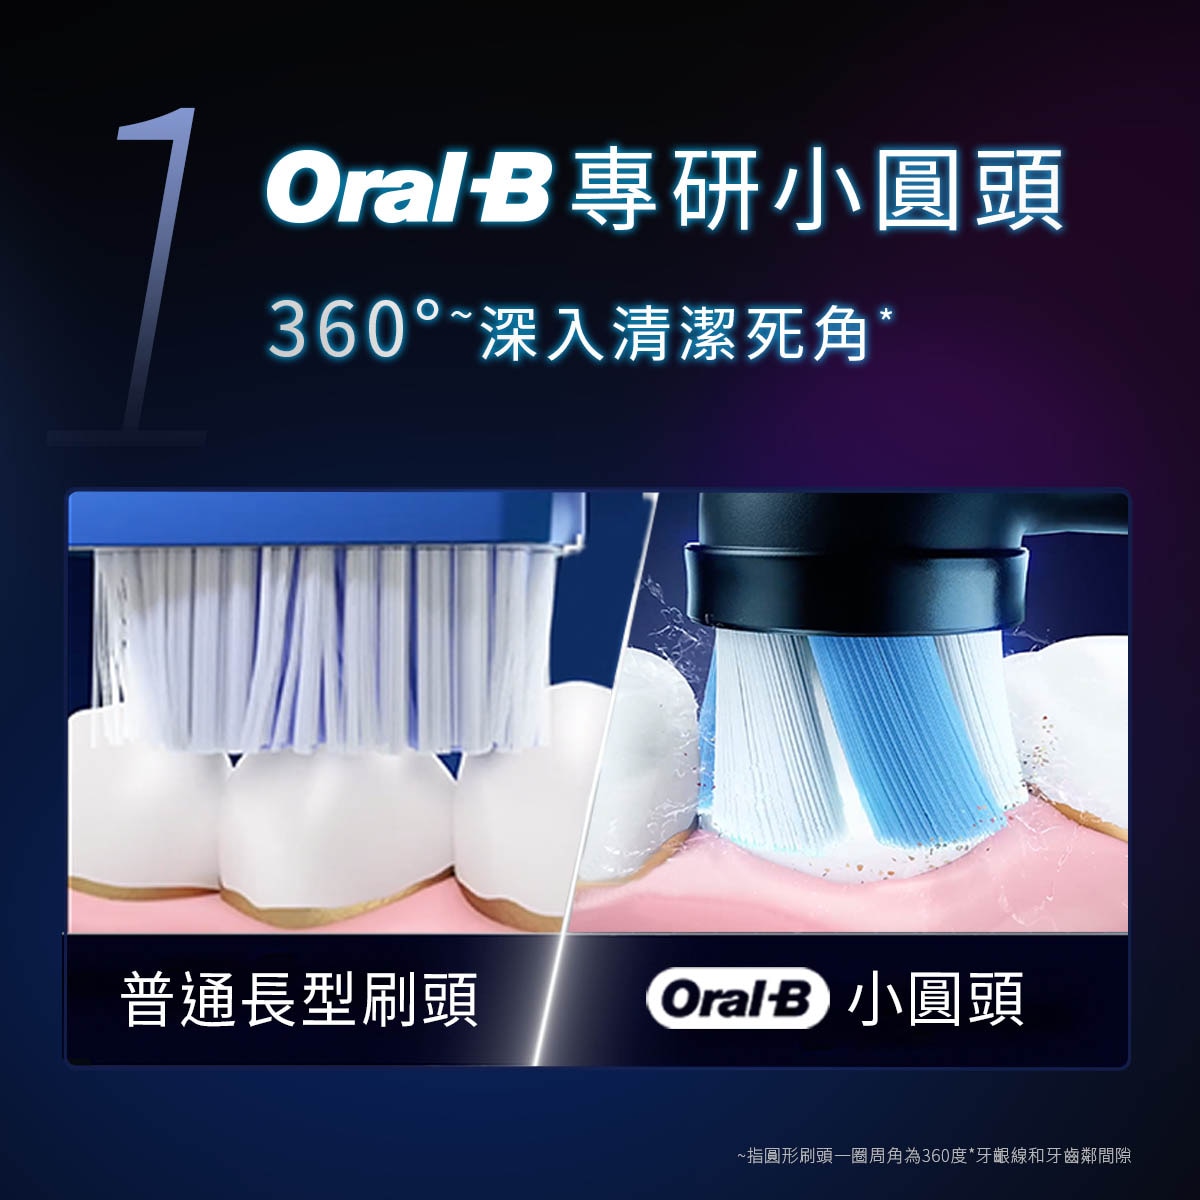 Oral-B 歐樂B特有圓形設計，更貼近牙齒形狀，全面包覆牙齒，深入牙齒難刷縫隙，有效清除牙菌斑。